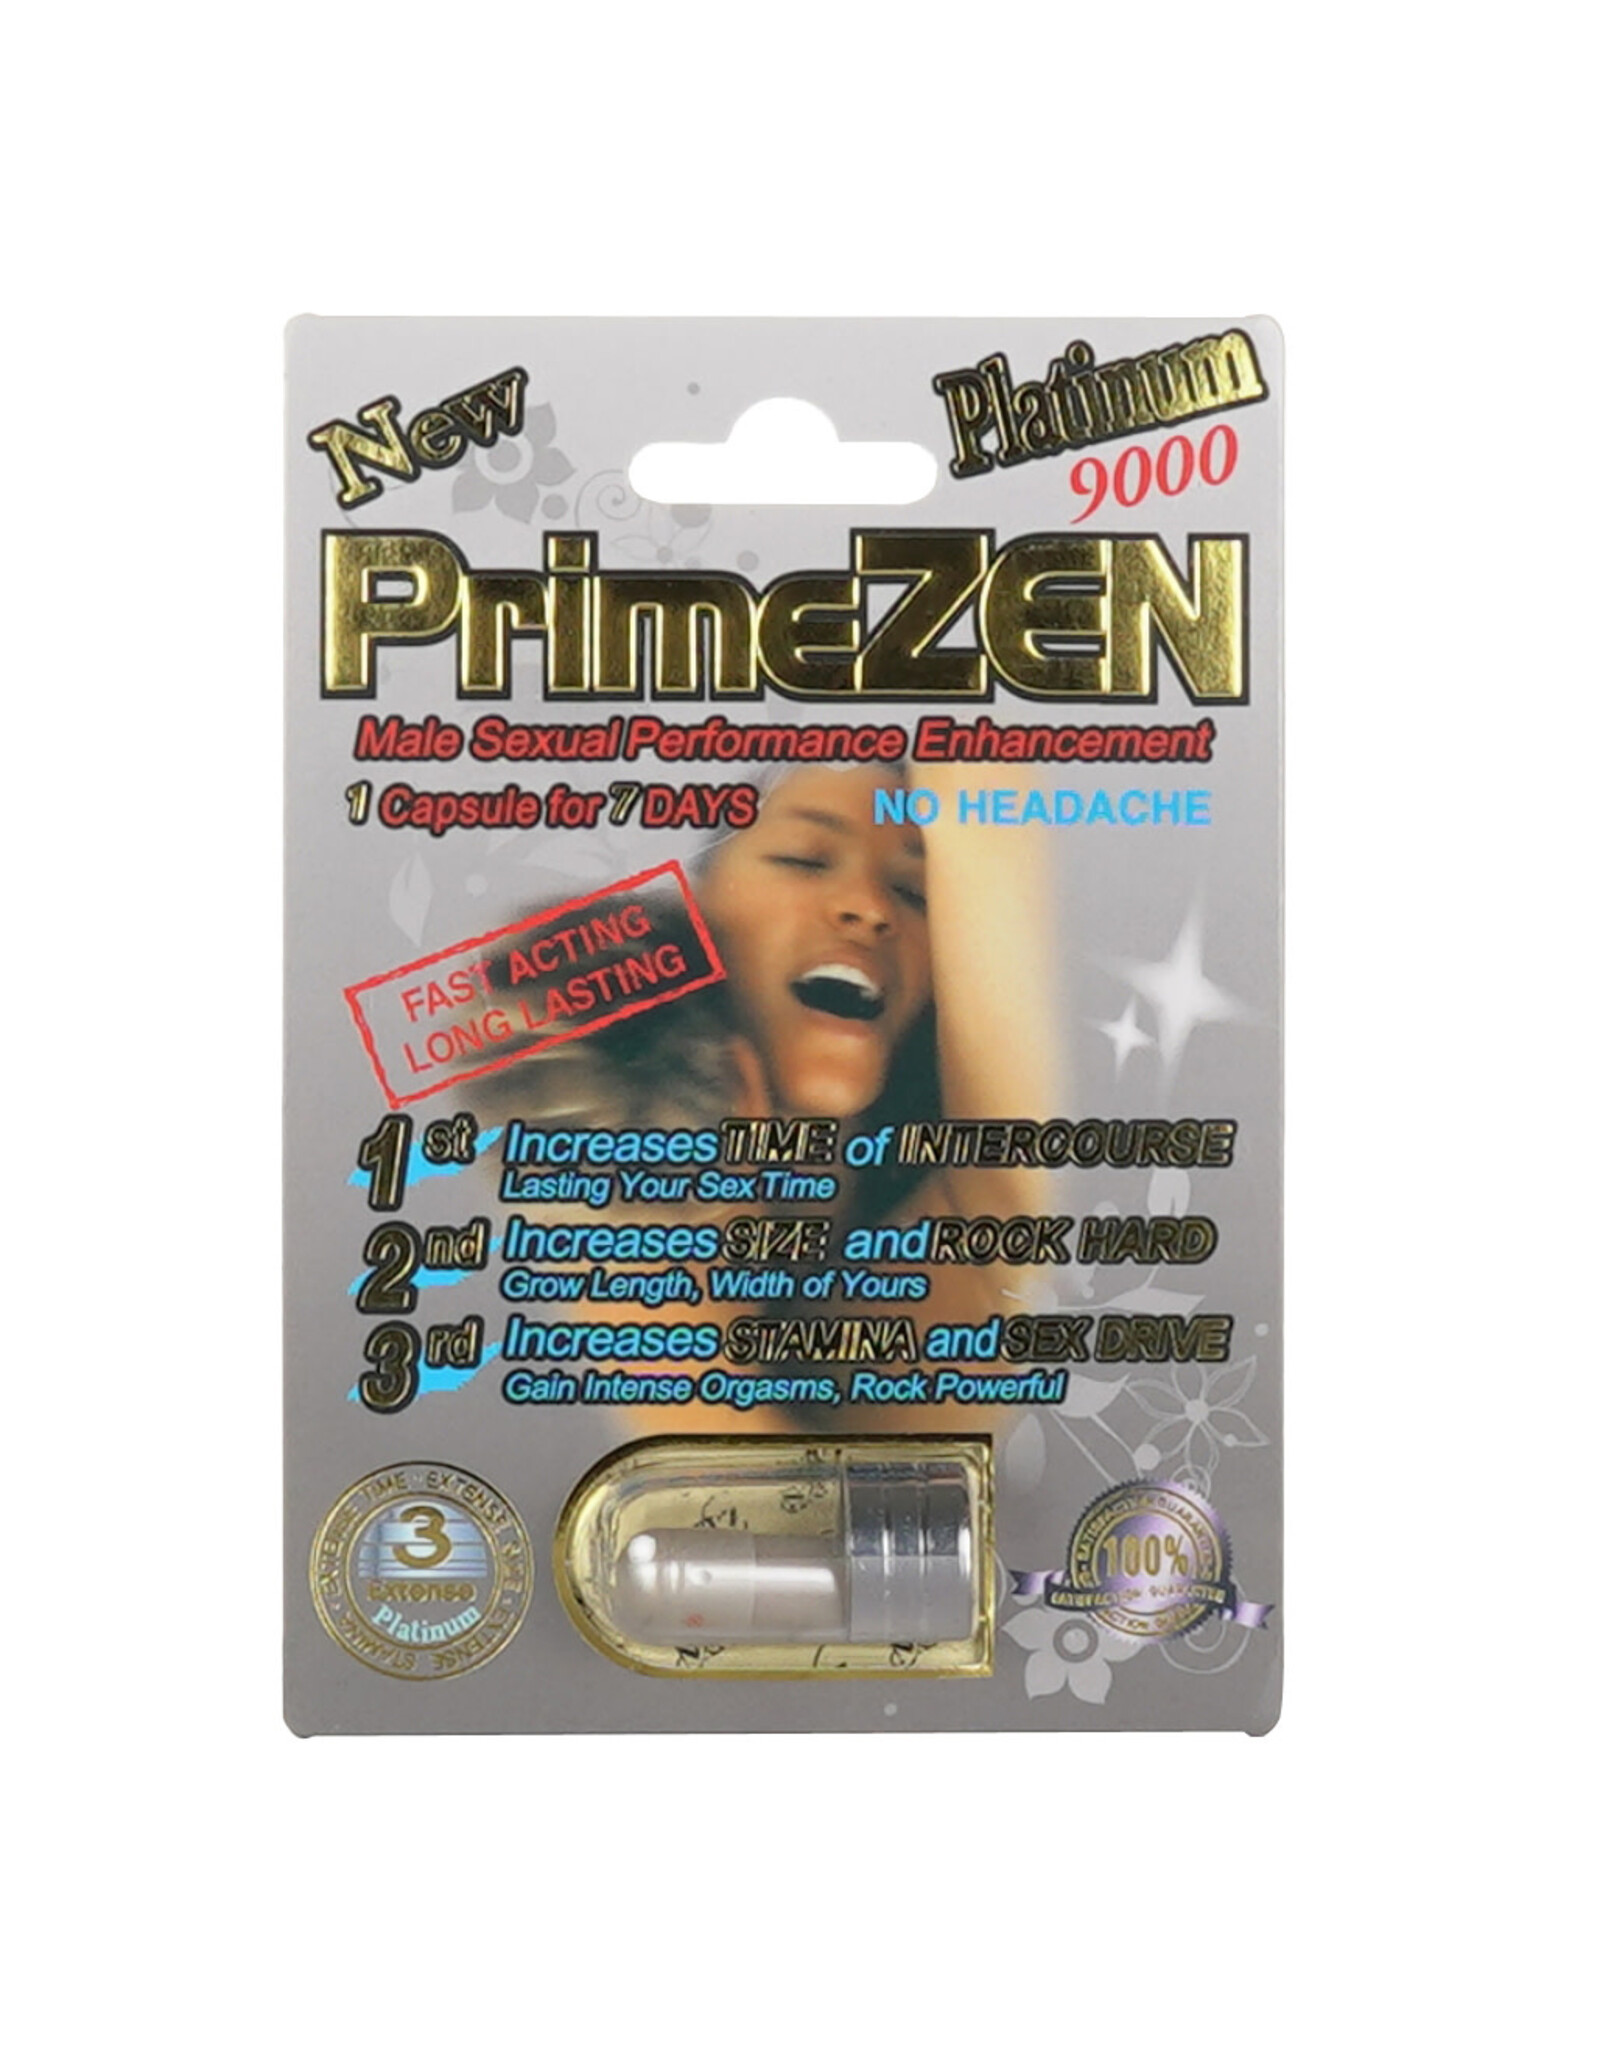 PrimeZen Platinum 9000 Male Enhancement